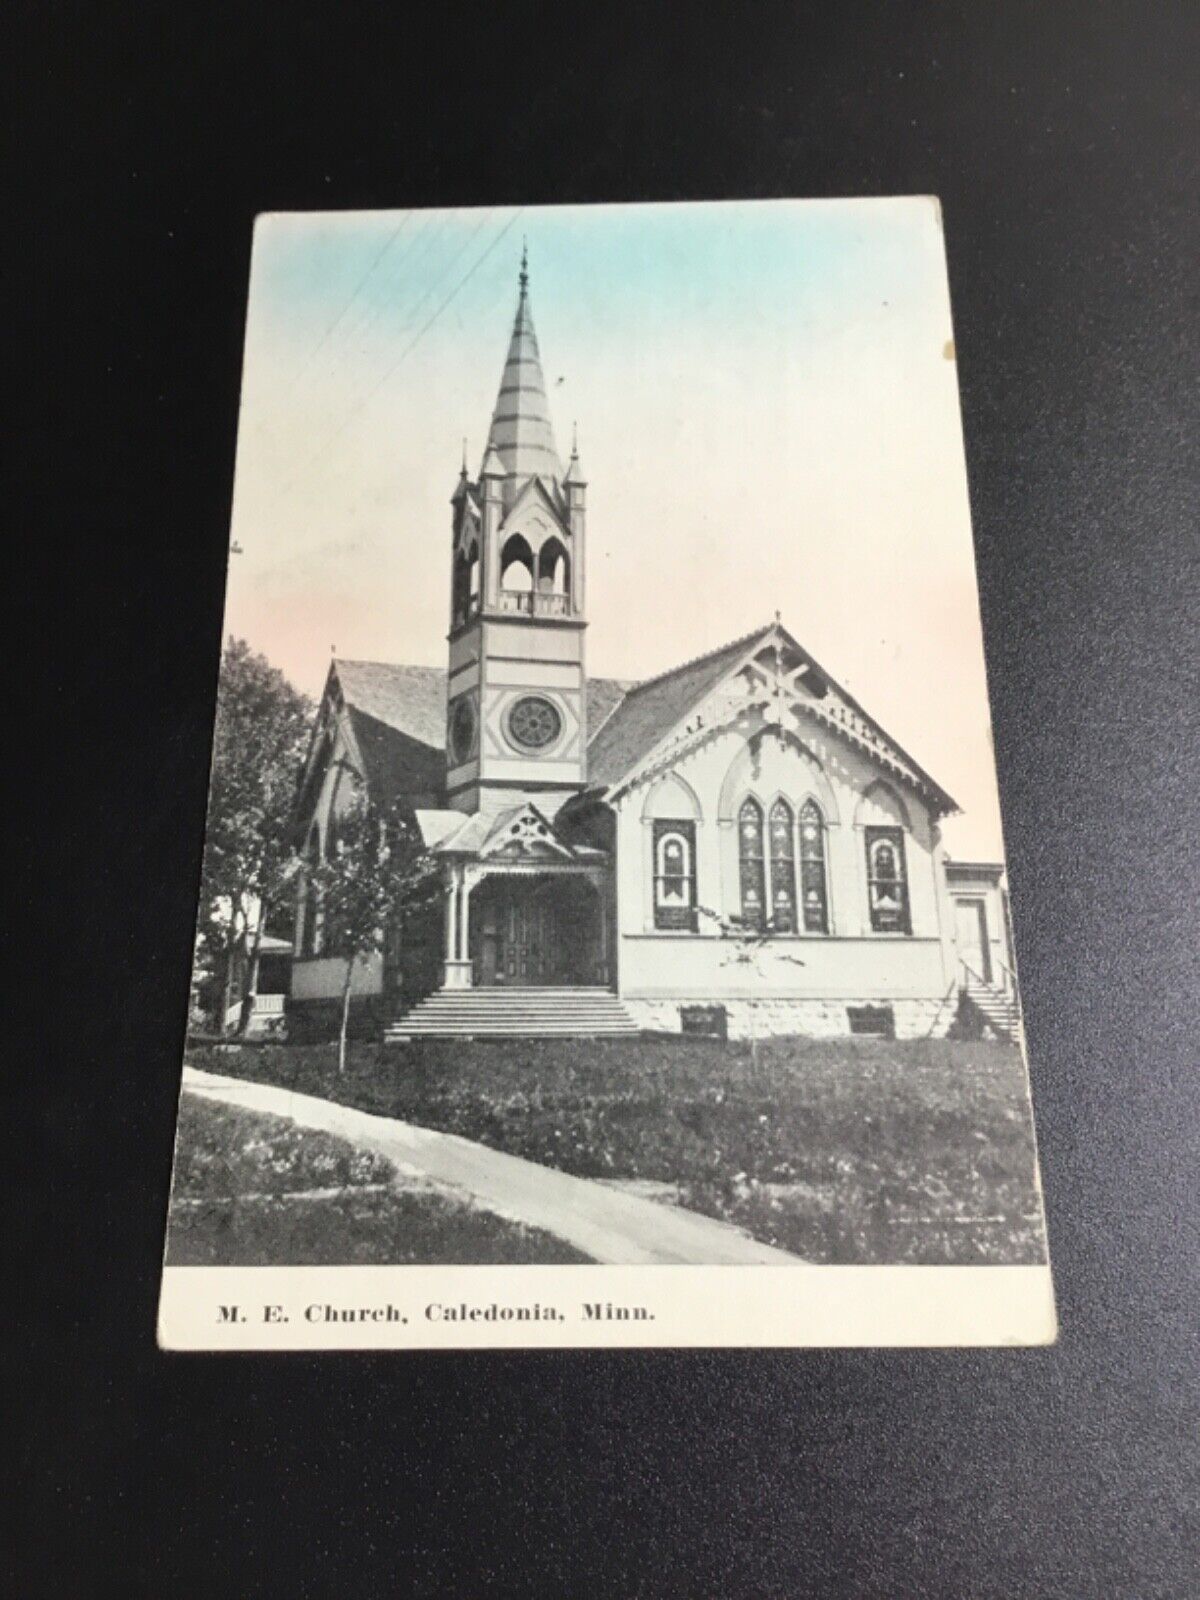 1912 Caledonia, Minnesota Postcard - M.E. Church 258